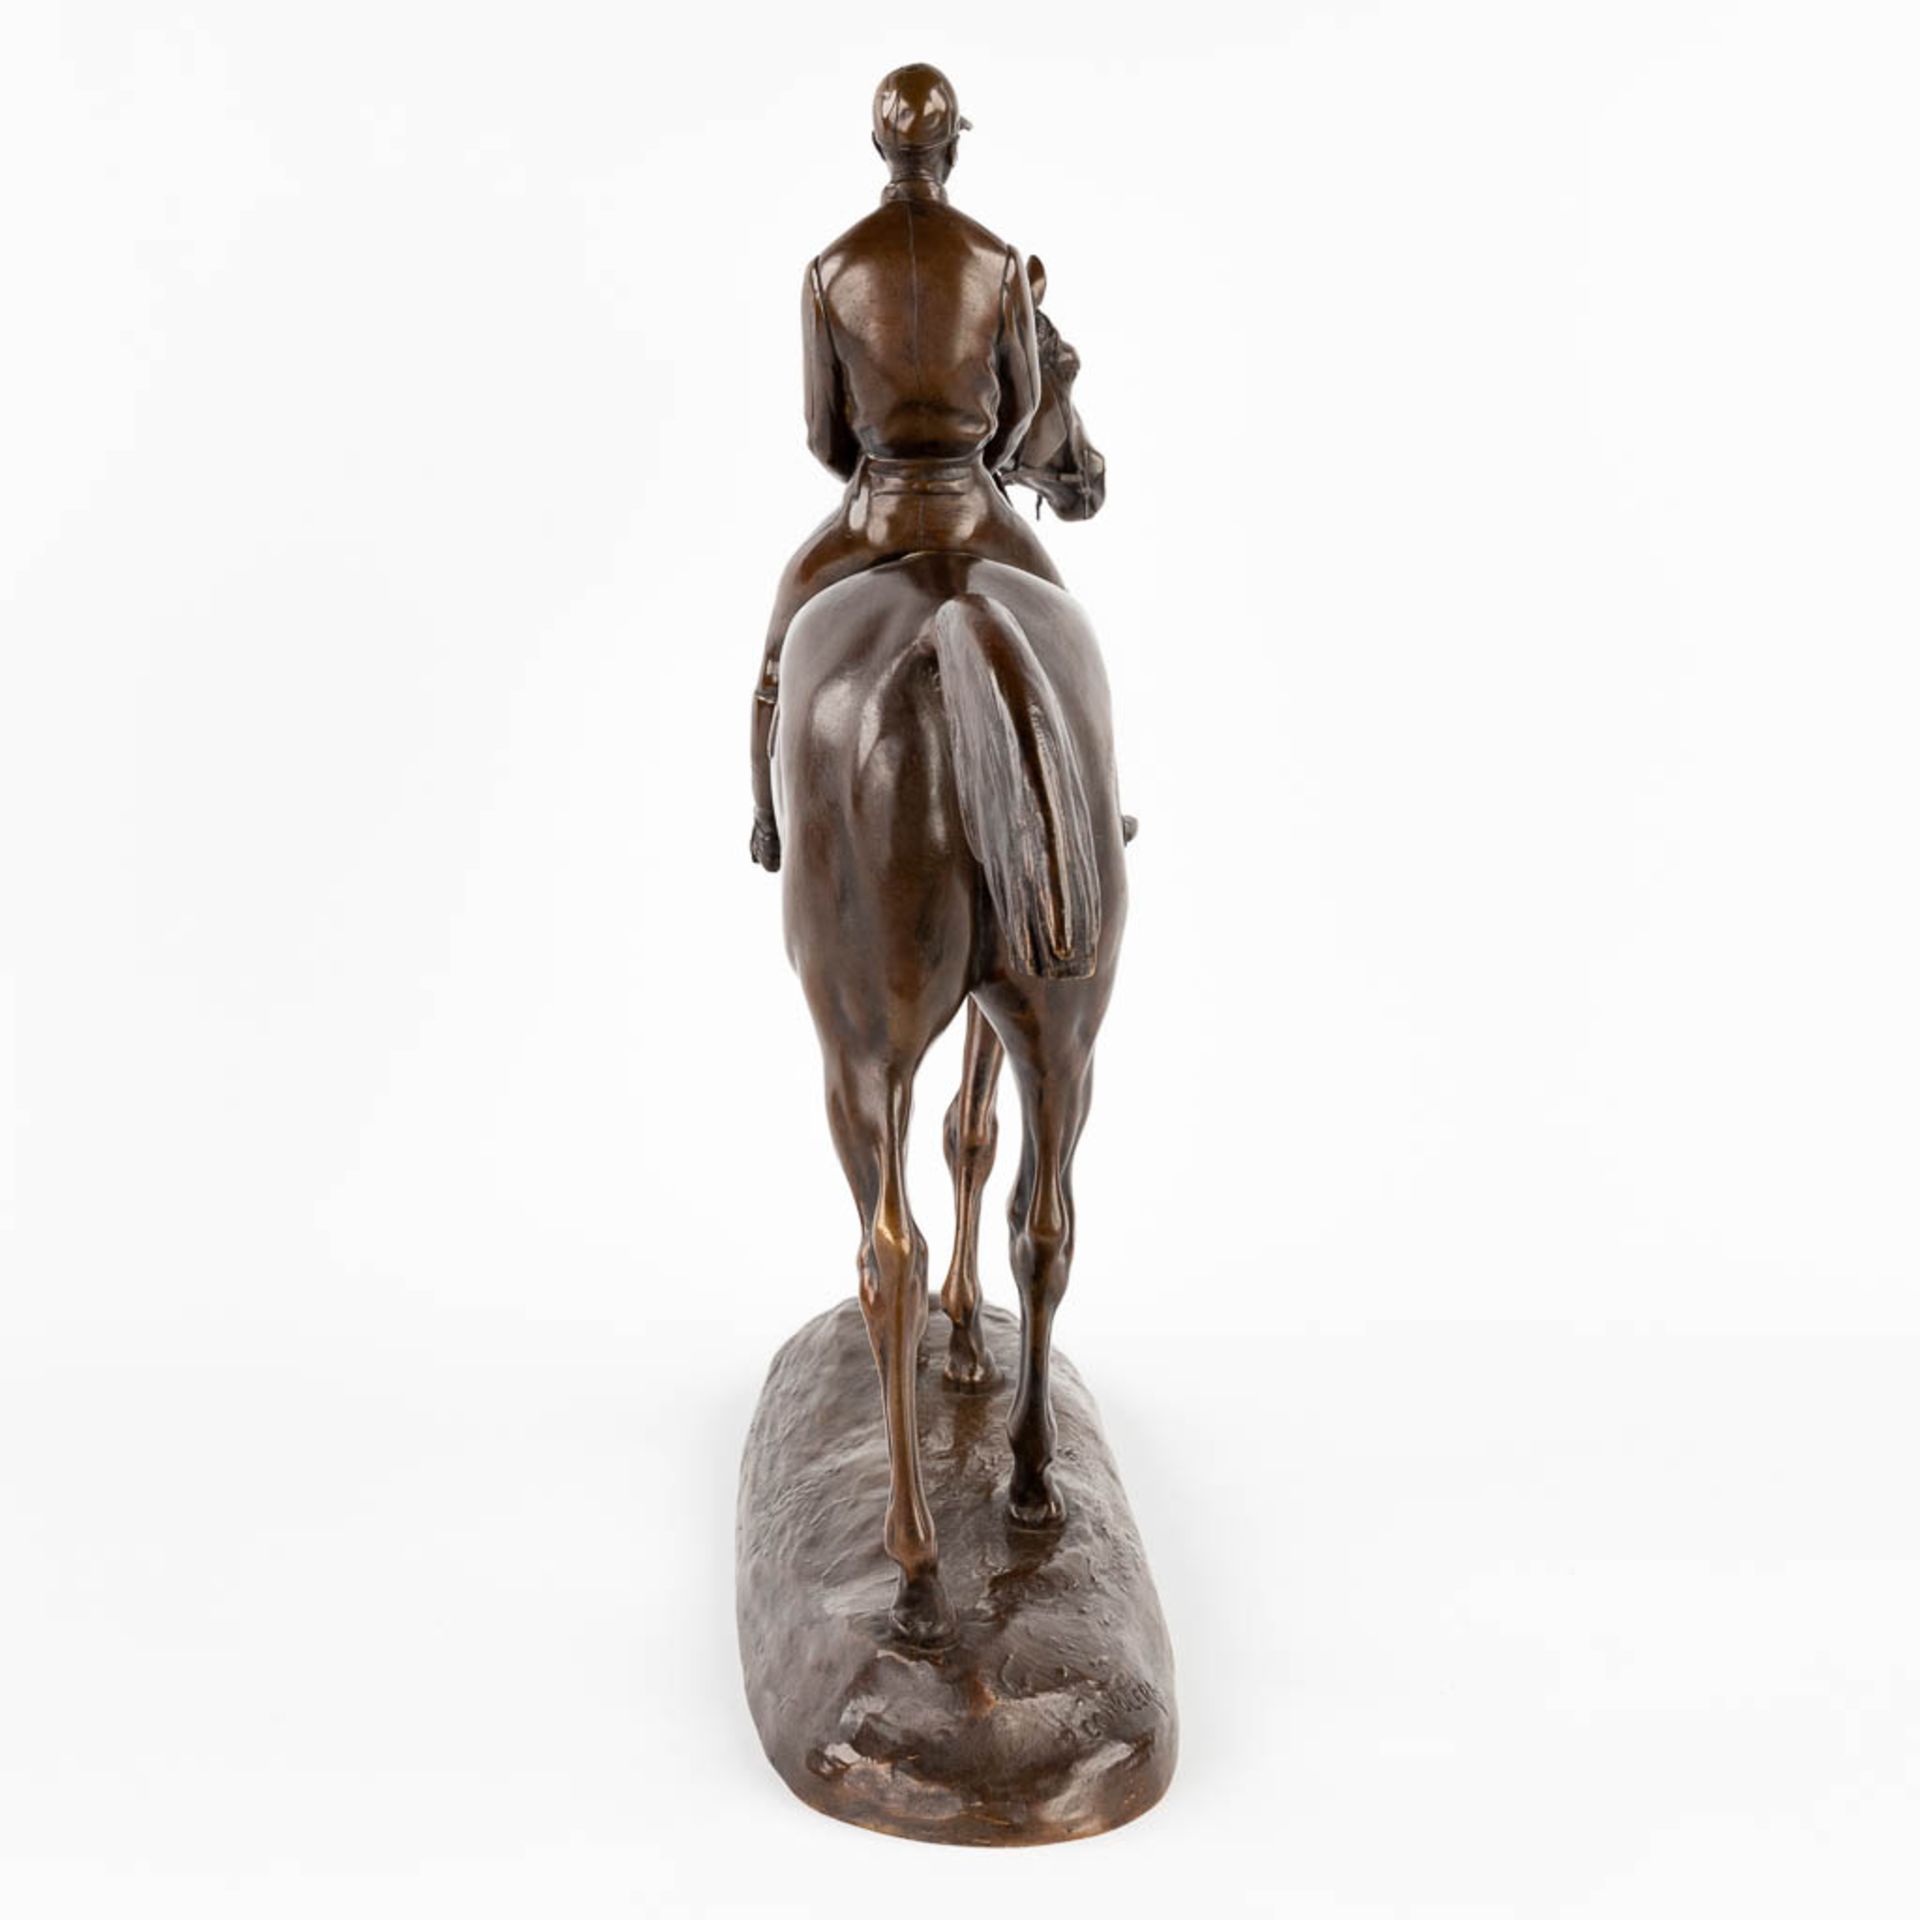 Paul COMOLÉRA (1818-c.1897) 'Horse with rider' patinated bronze. (L: 12 x W: 50 x H: 46 cm) - Bild 6 aus 10